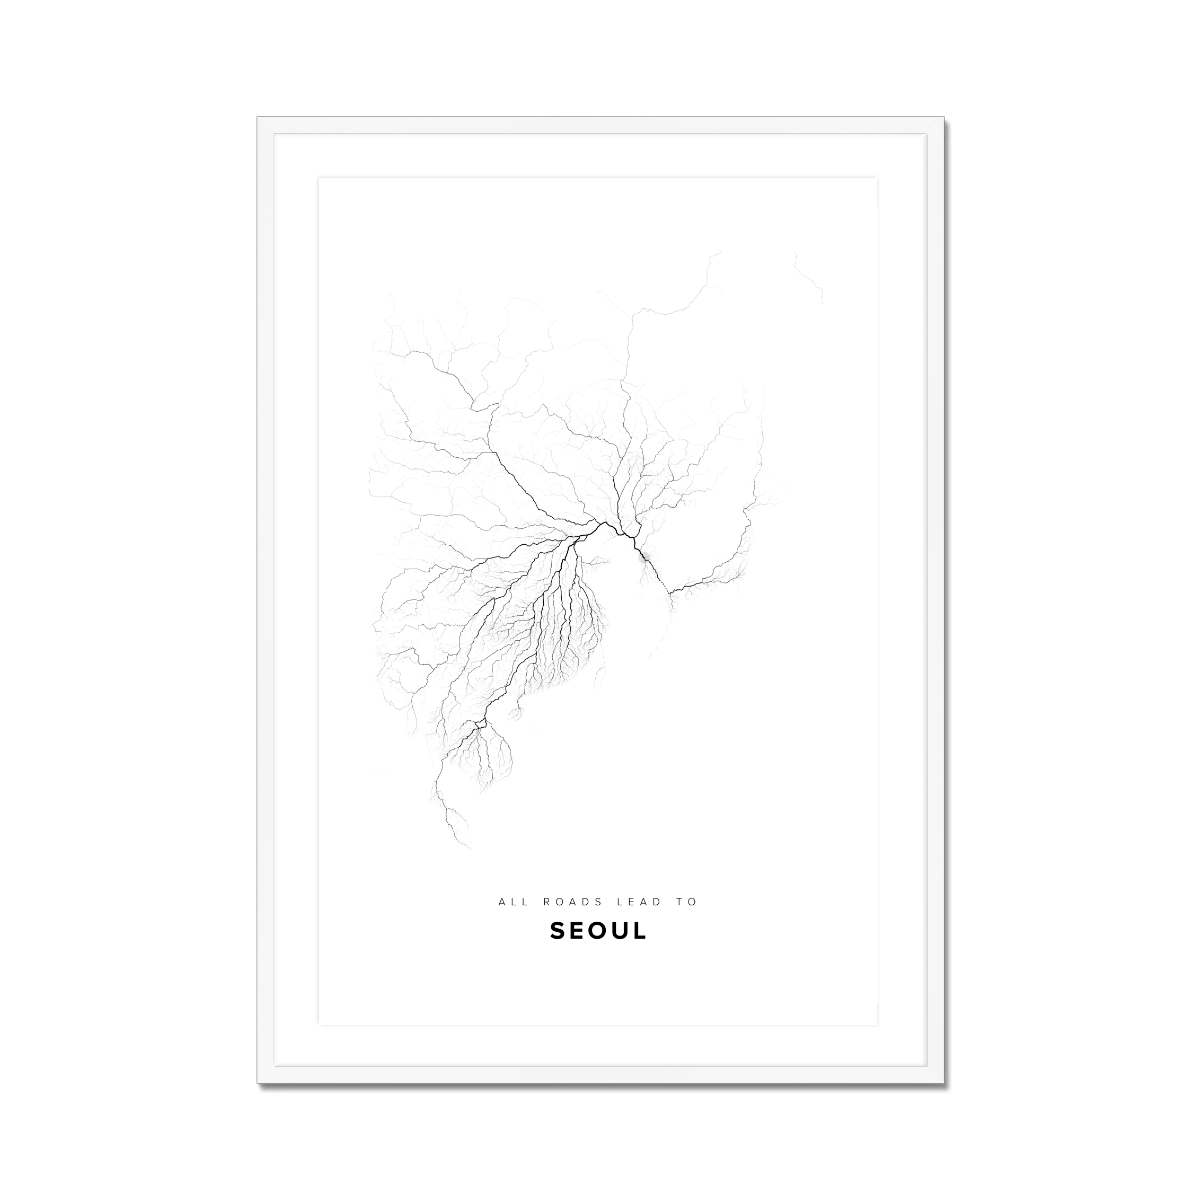 All roads lead to Seoul (Korea (Republic of)) Fine Art Map Print